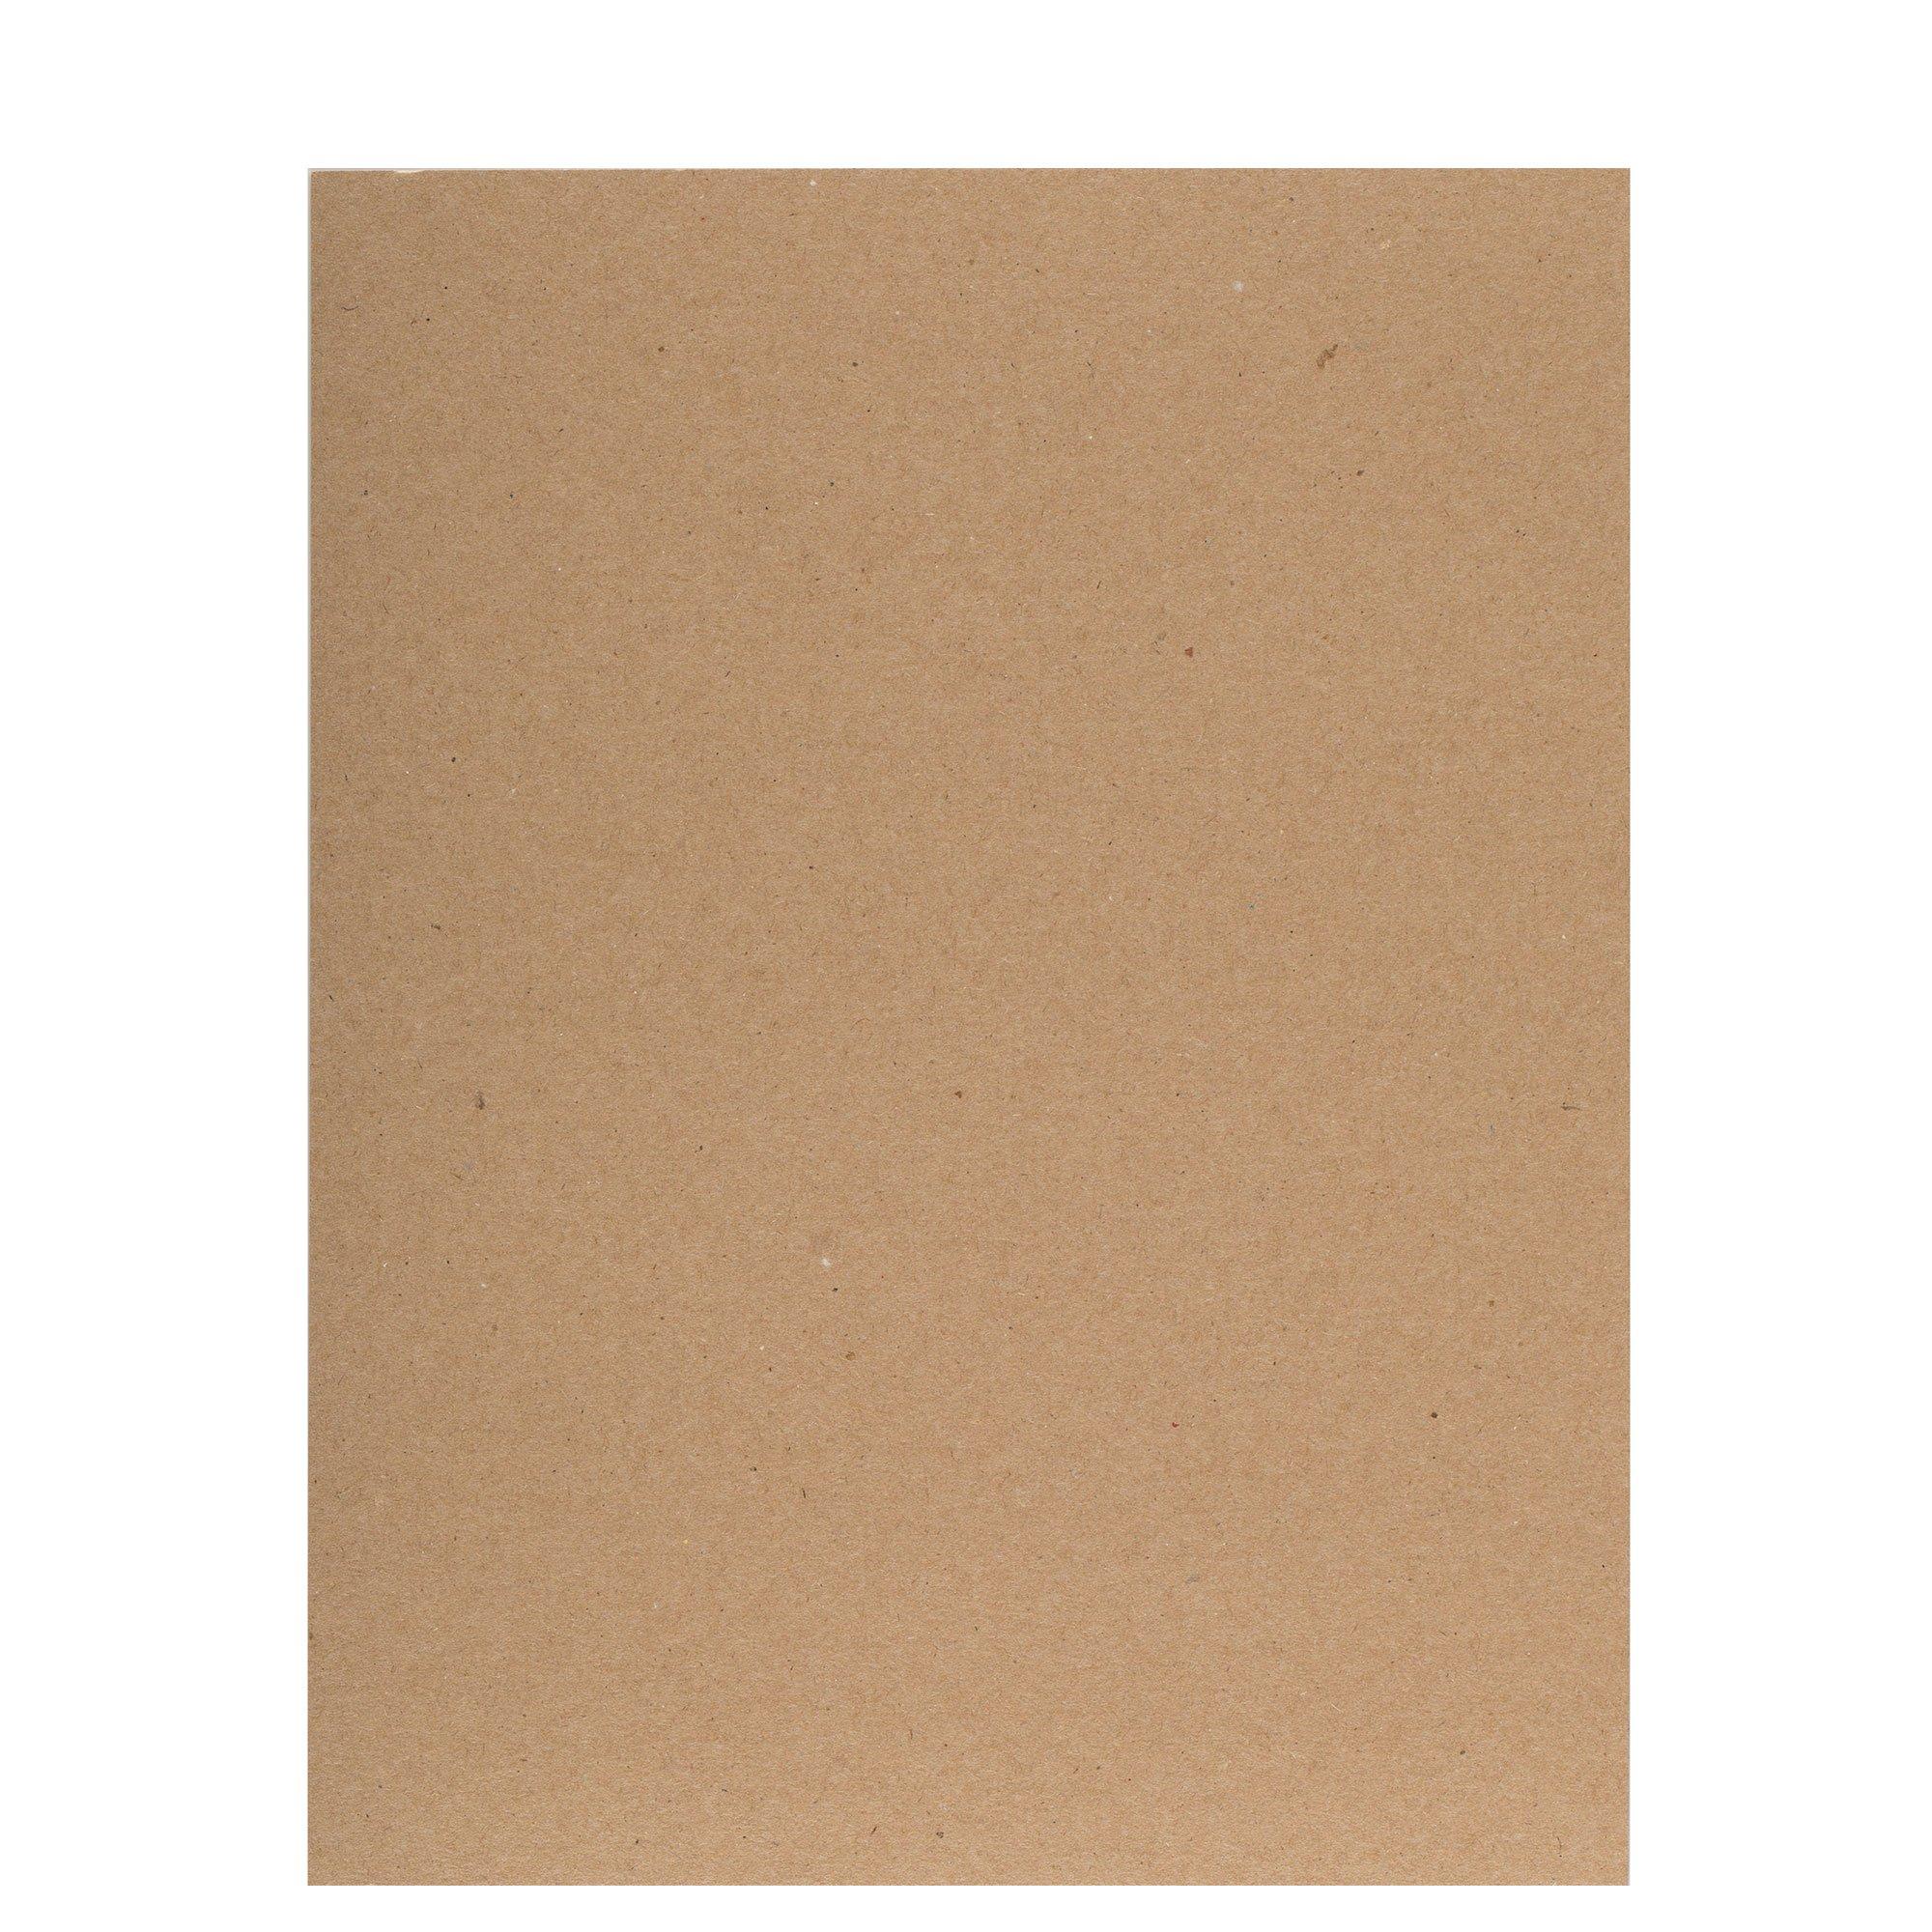 Primary Foil Cardstock Paper Pack - 8 1/2 x 11, Hobby Lobby